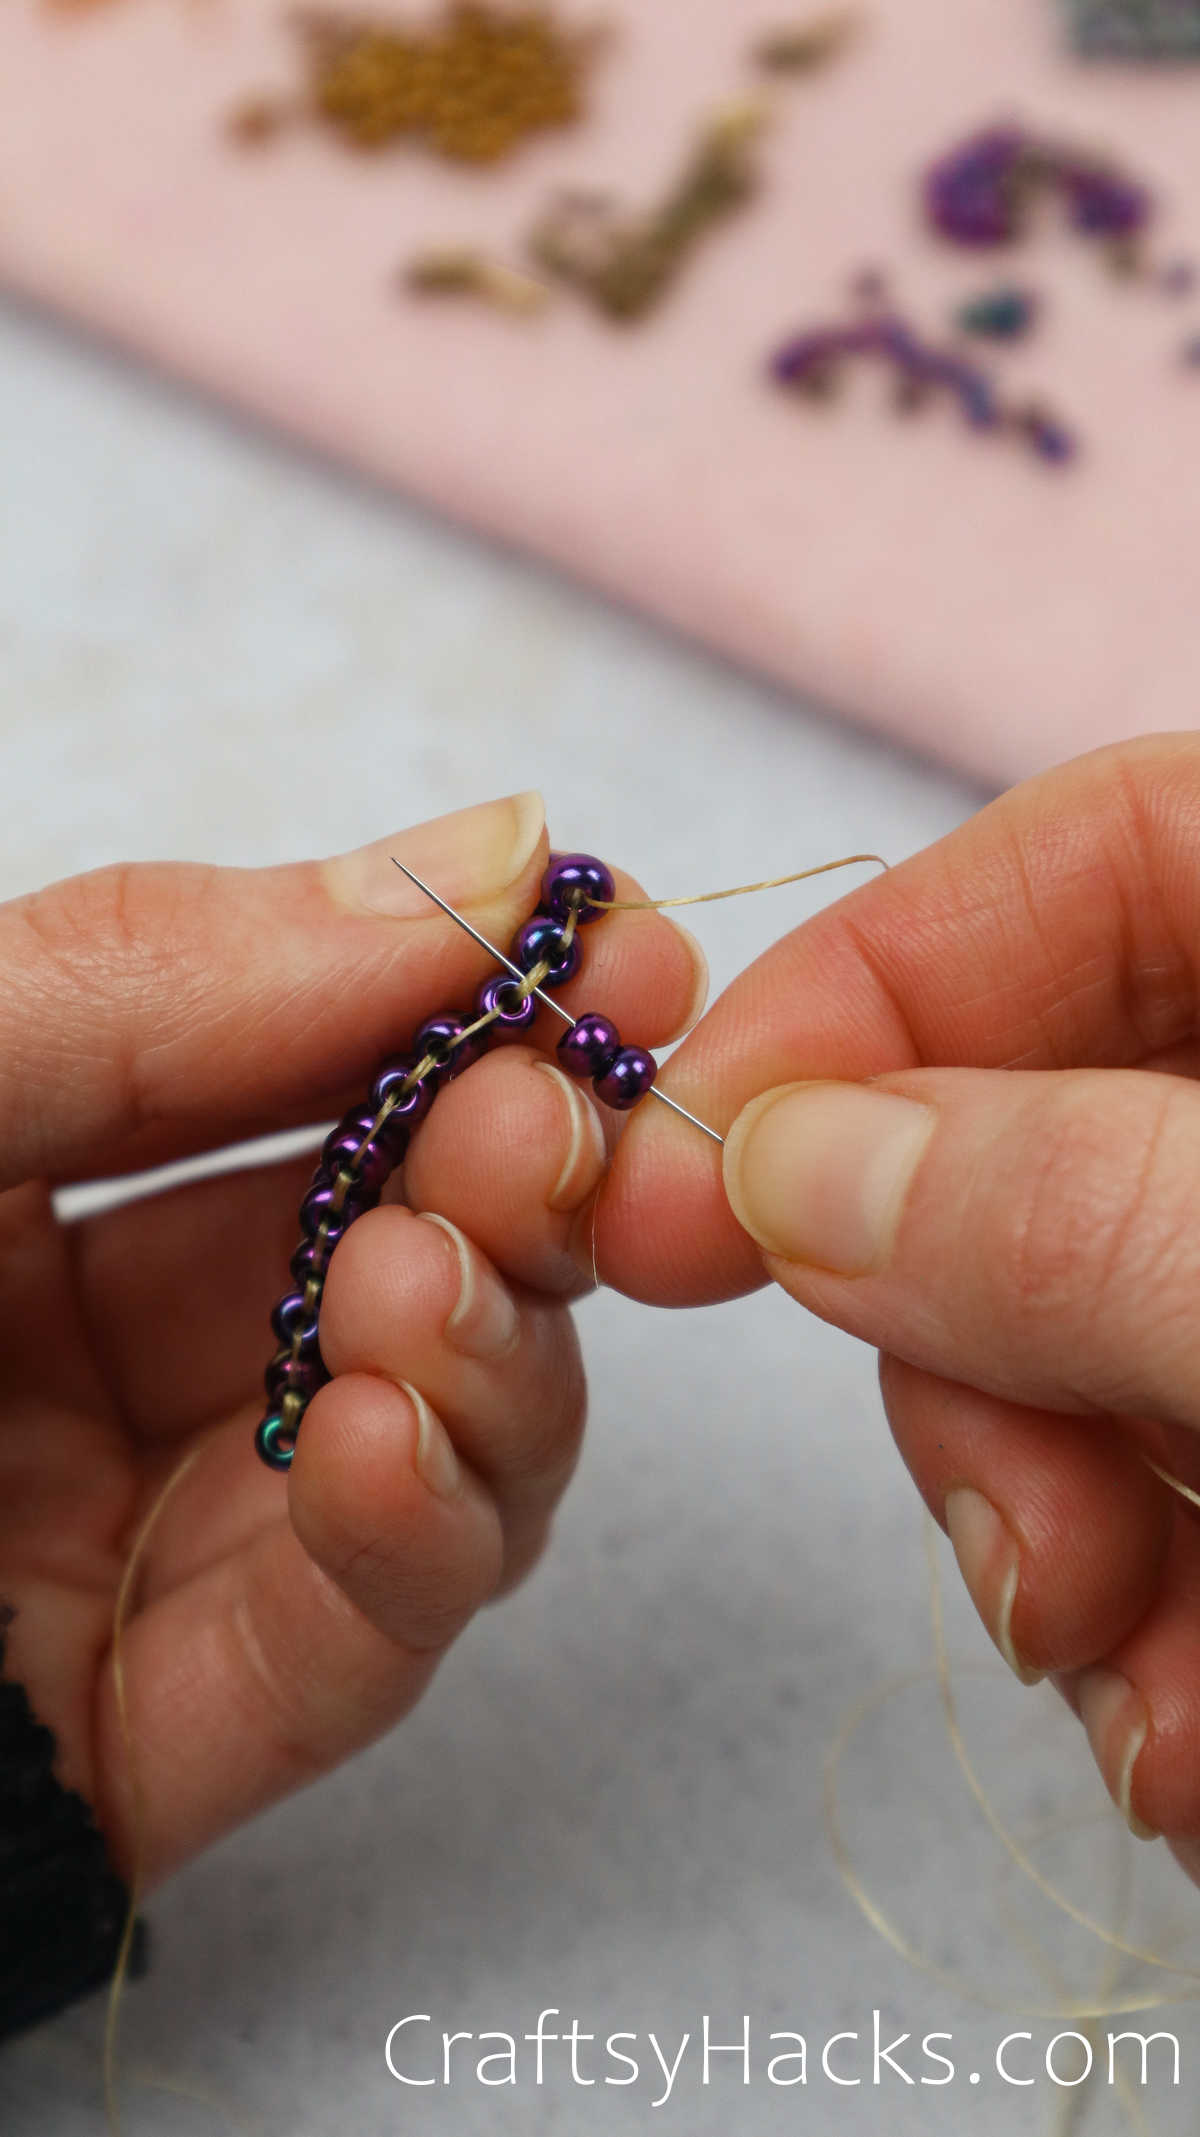 threading more beads